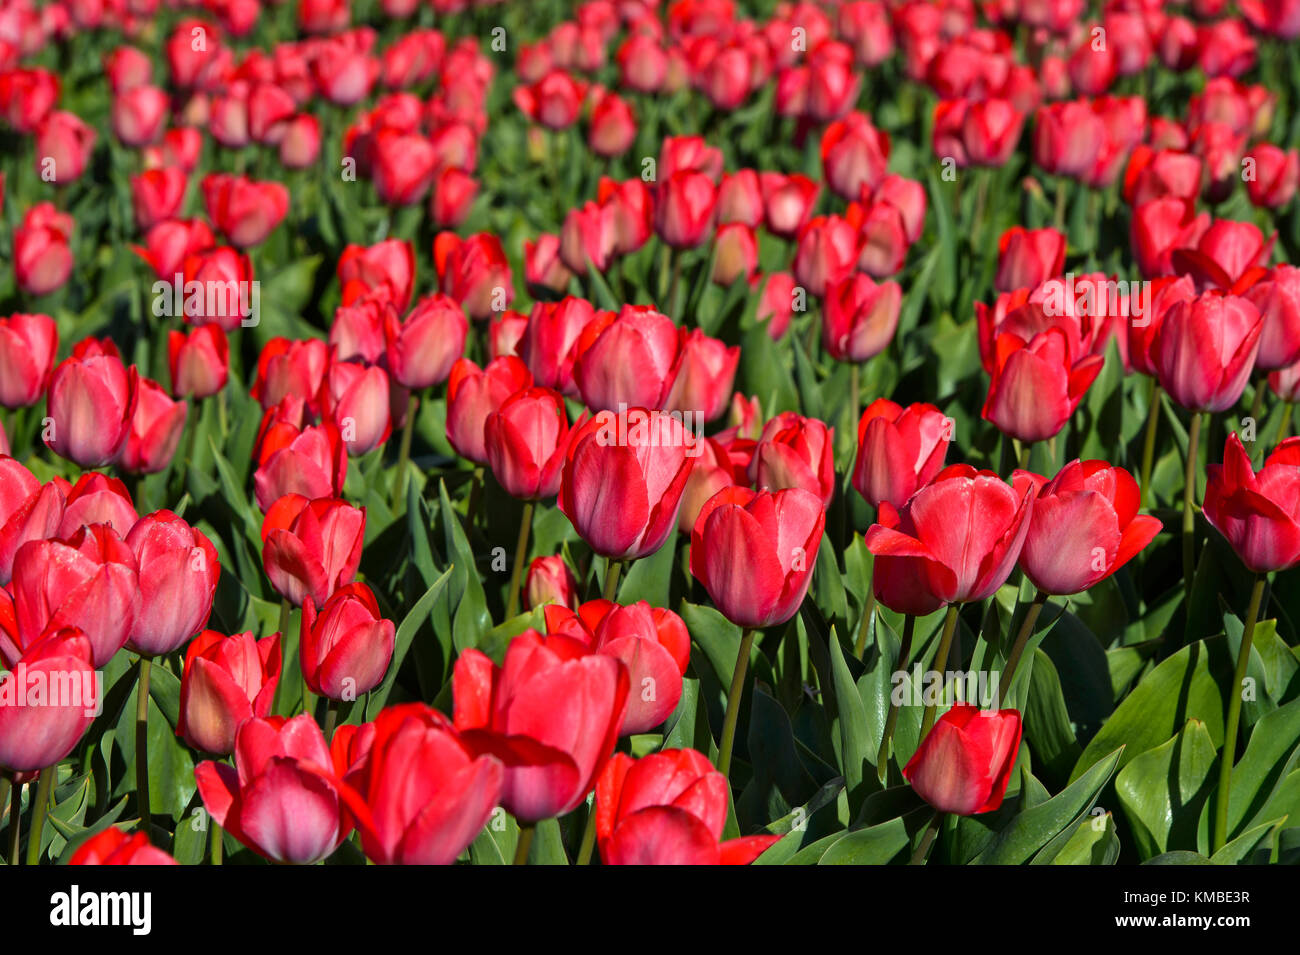 Field of pink tulips for the production of flower bulbs in the Bollenstreek area, Noordwijkerhout, Netherlands Stock Photo